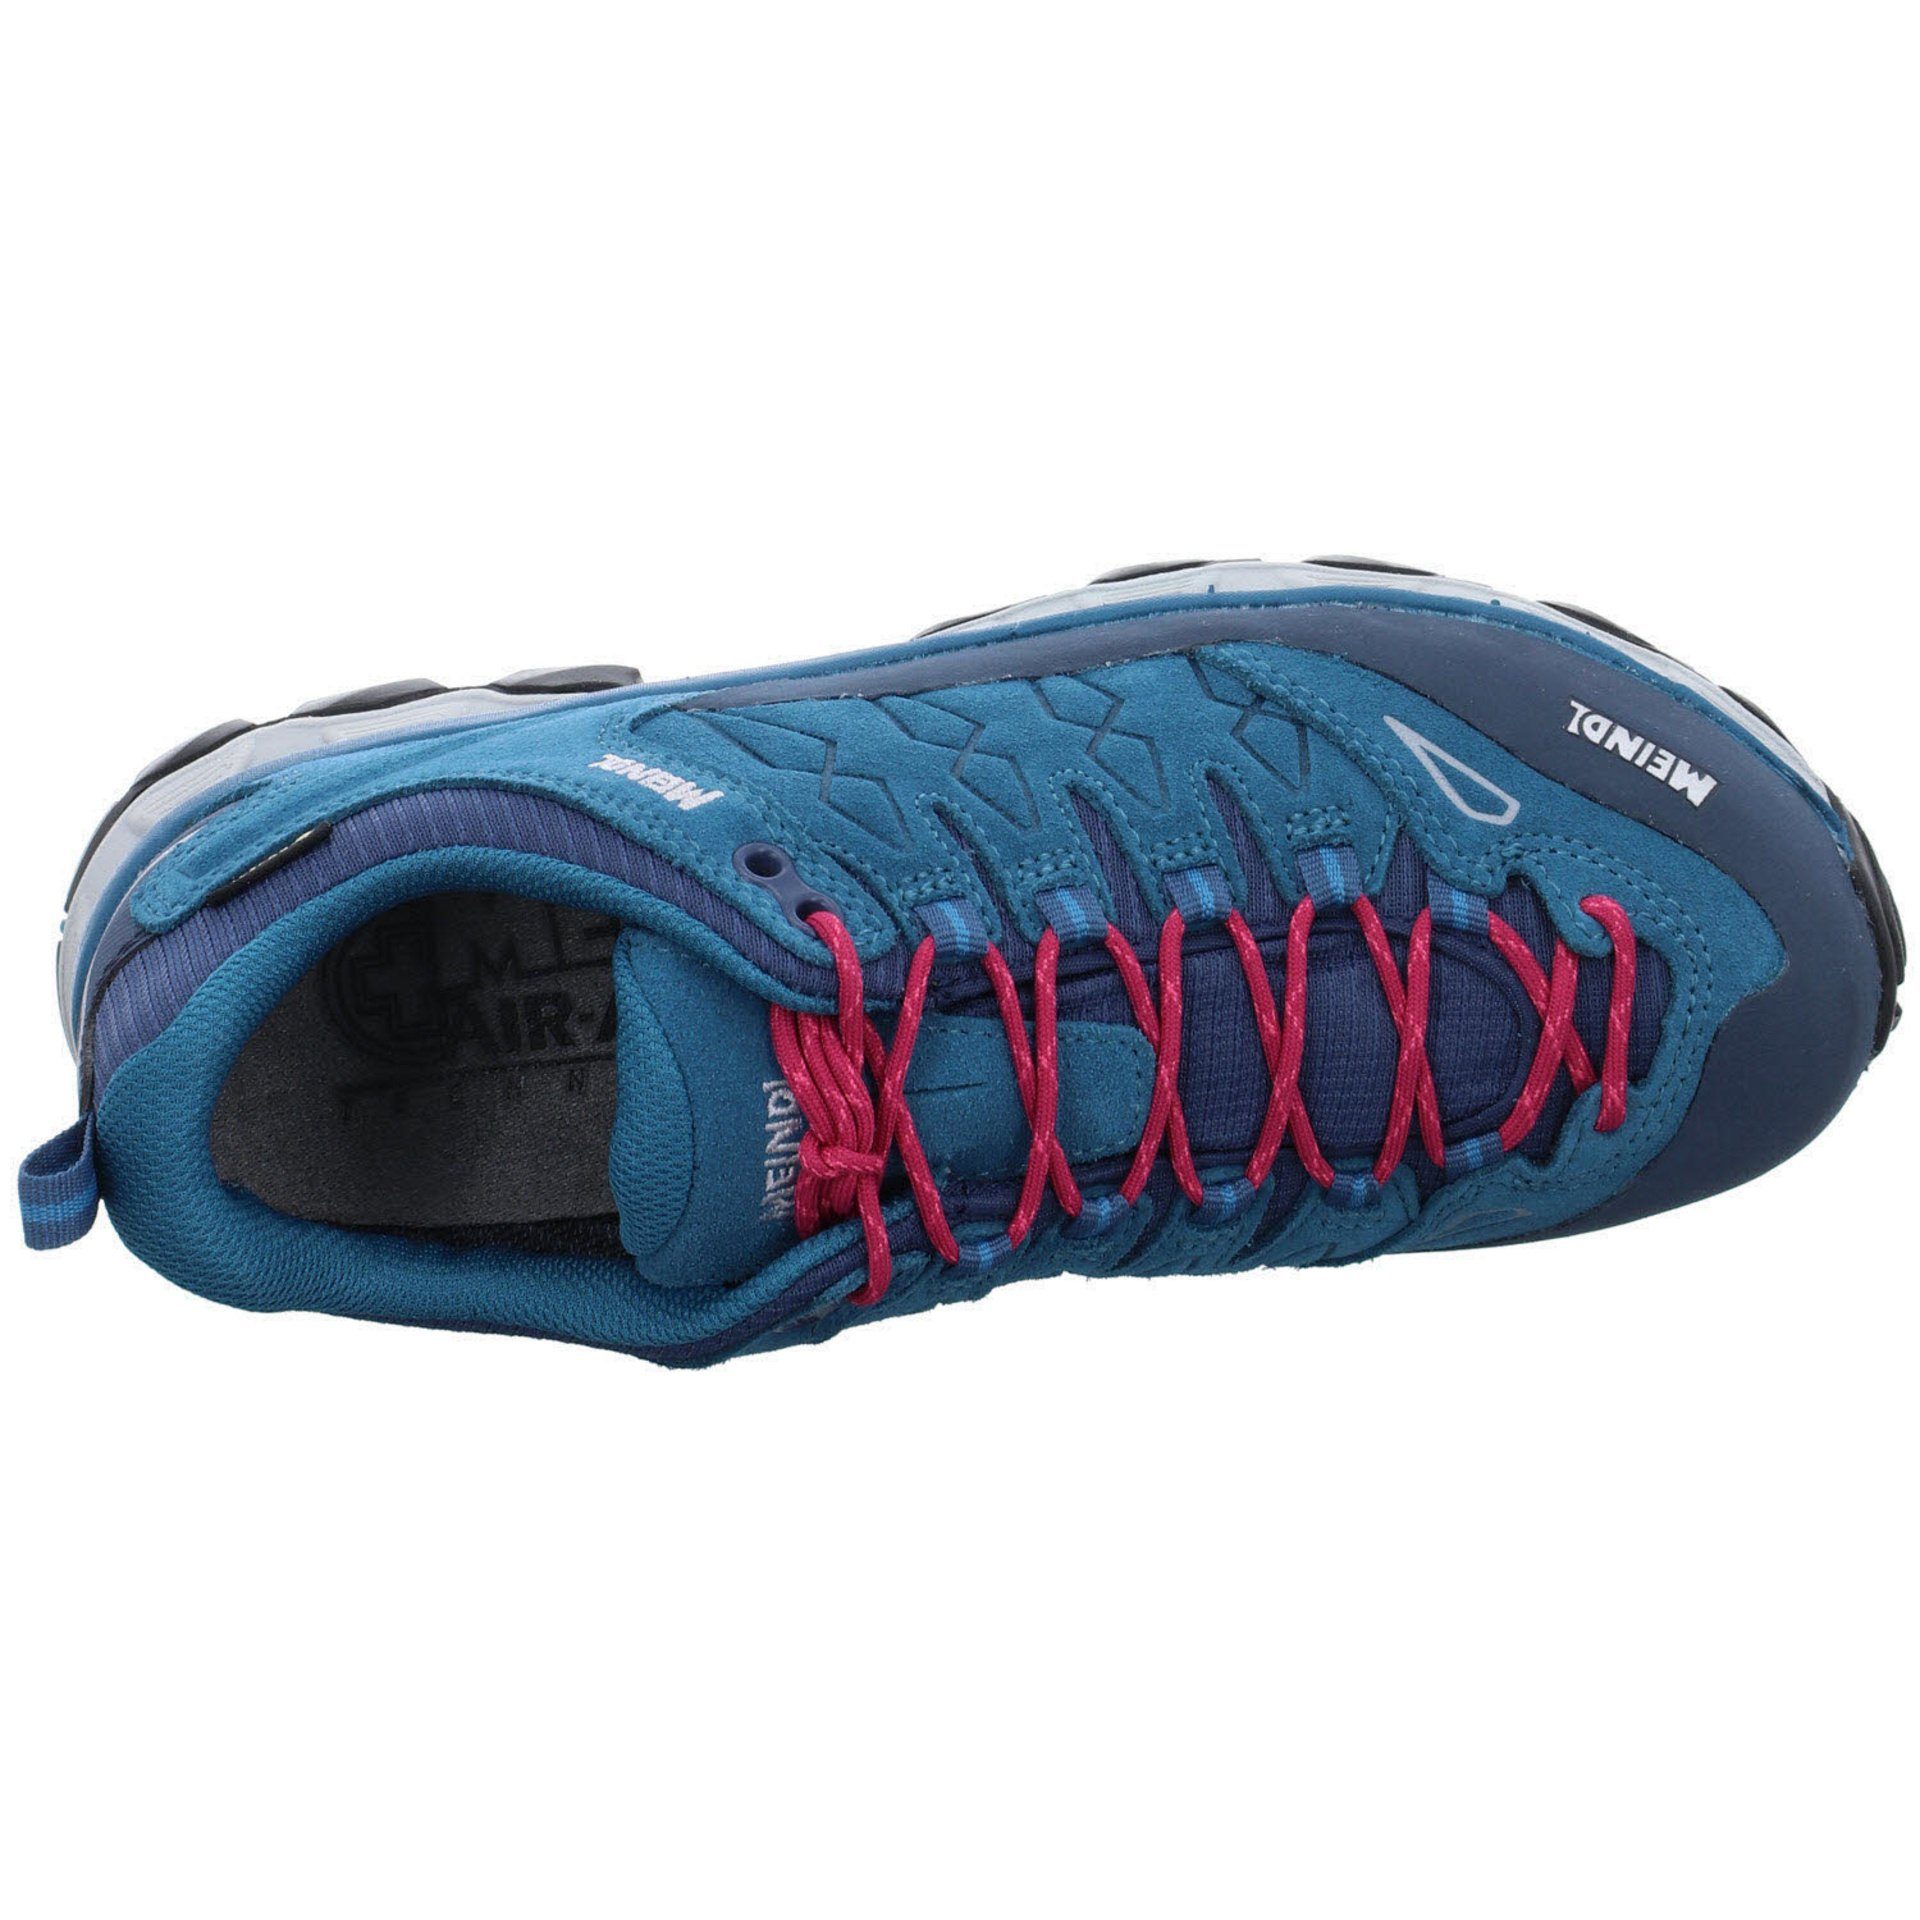 Meindl Damen Outdoorschuh PETROL/MAGENTA Schuhe Outdoor Leder-/Textilkombination